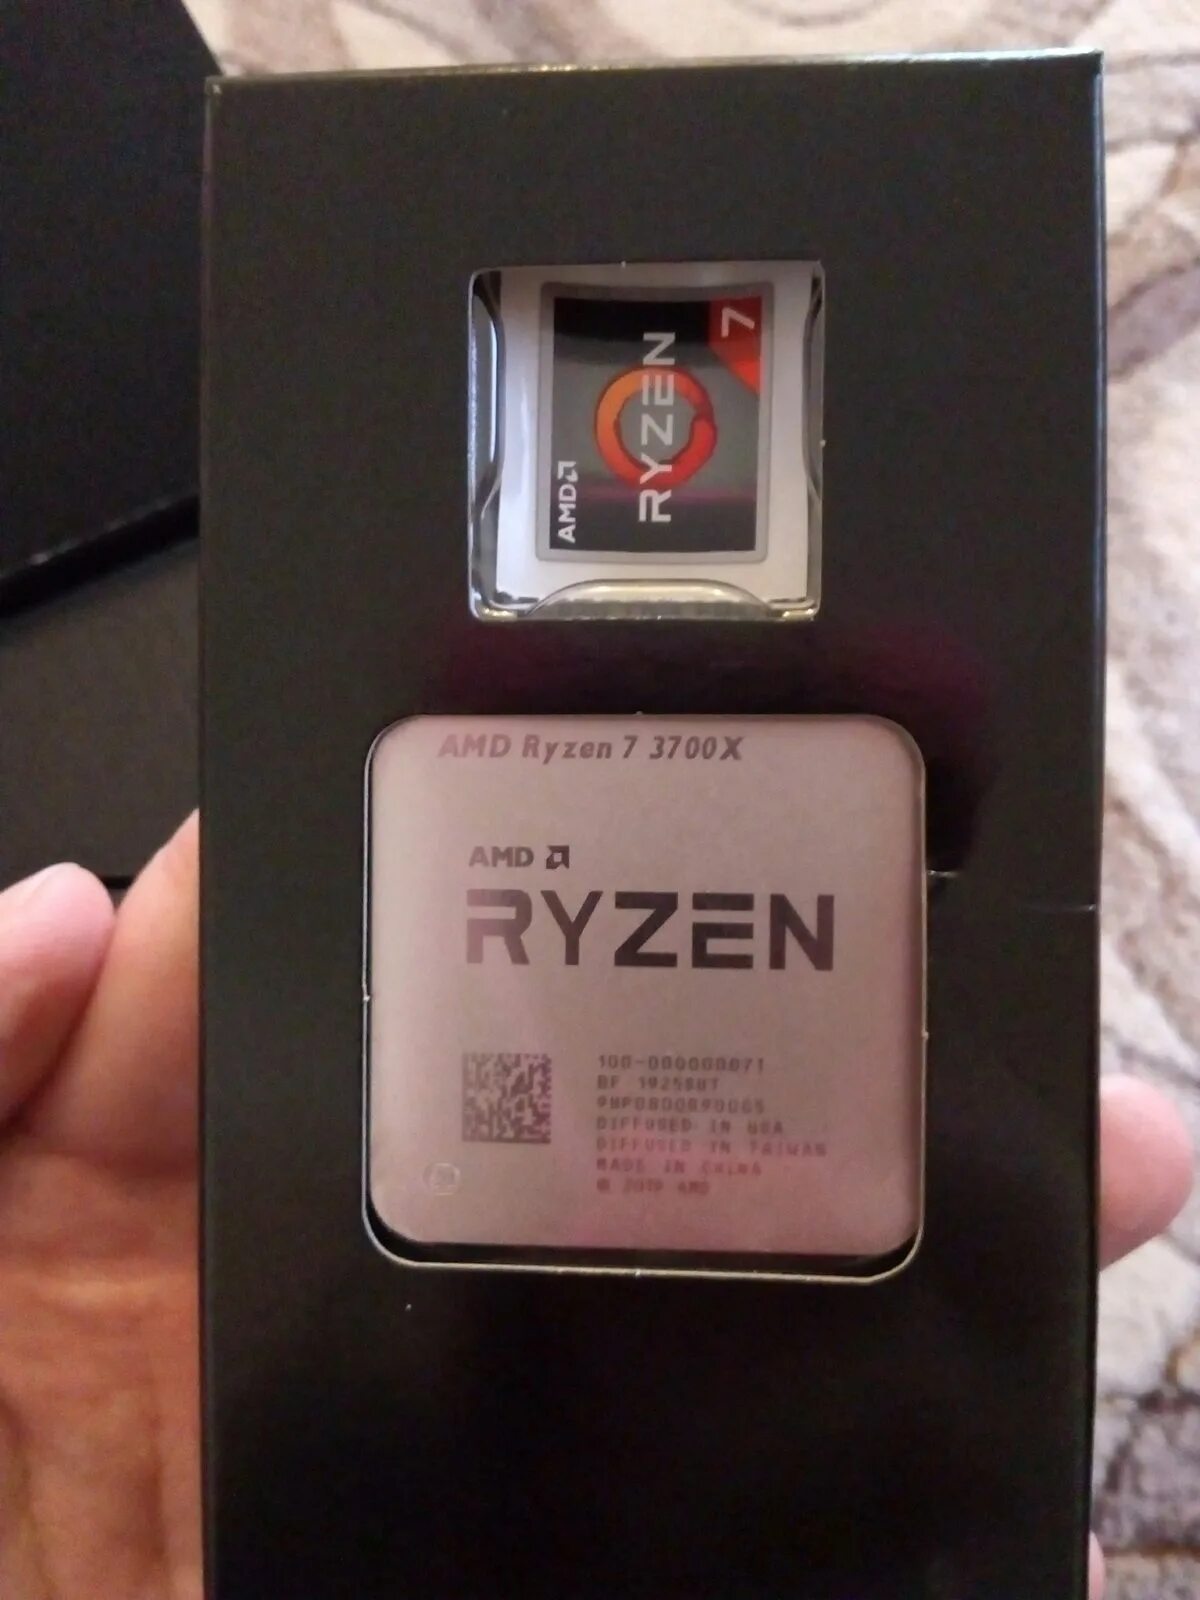 Ryzen 7 pro 3700. Процессор AMD Ryzen 7 3700x. Процессор AMD Ryzen 7 3700x am4 OEM. Компьютер AMD RYZEP 7 Pro 3700 OEM. Ryzrn 7 3700 Pro.